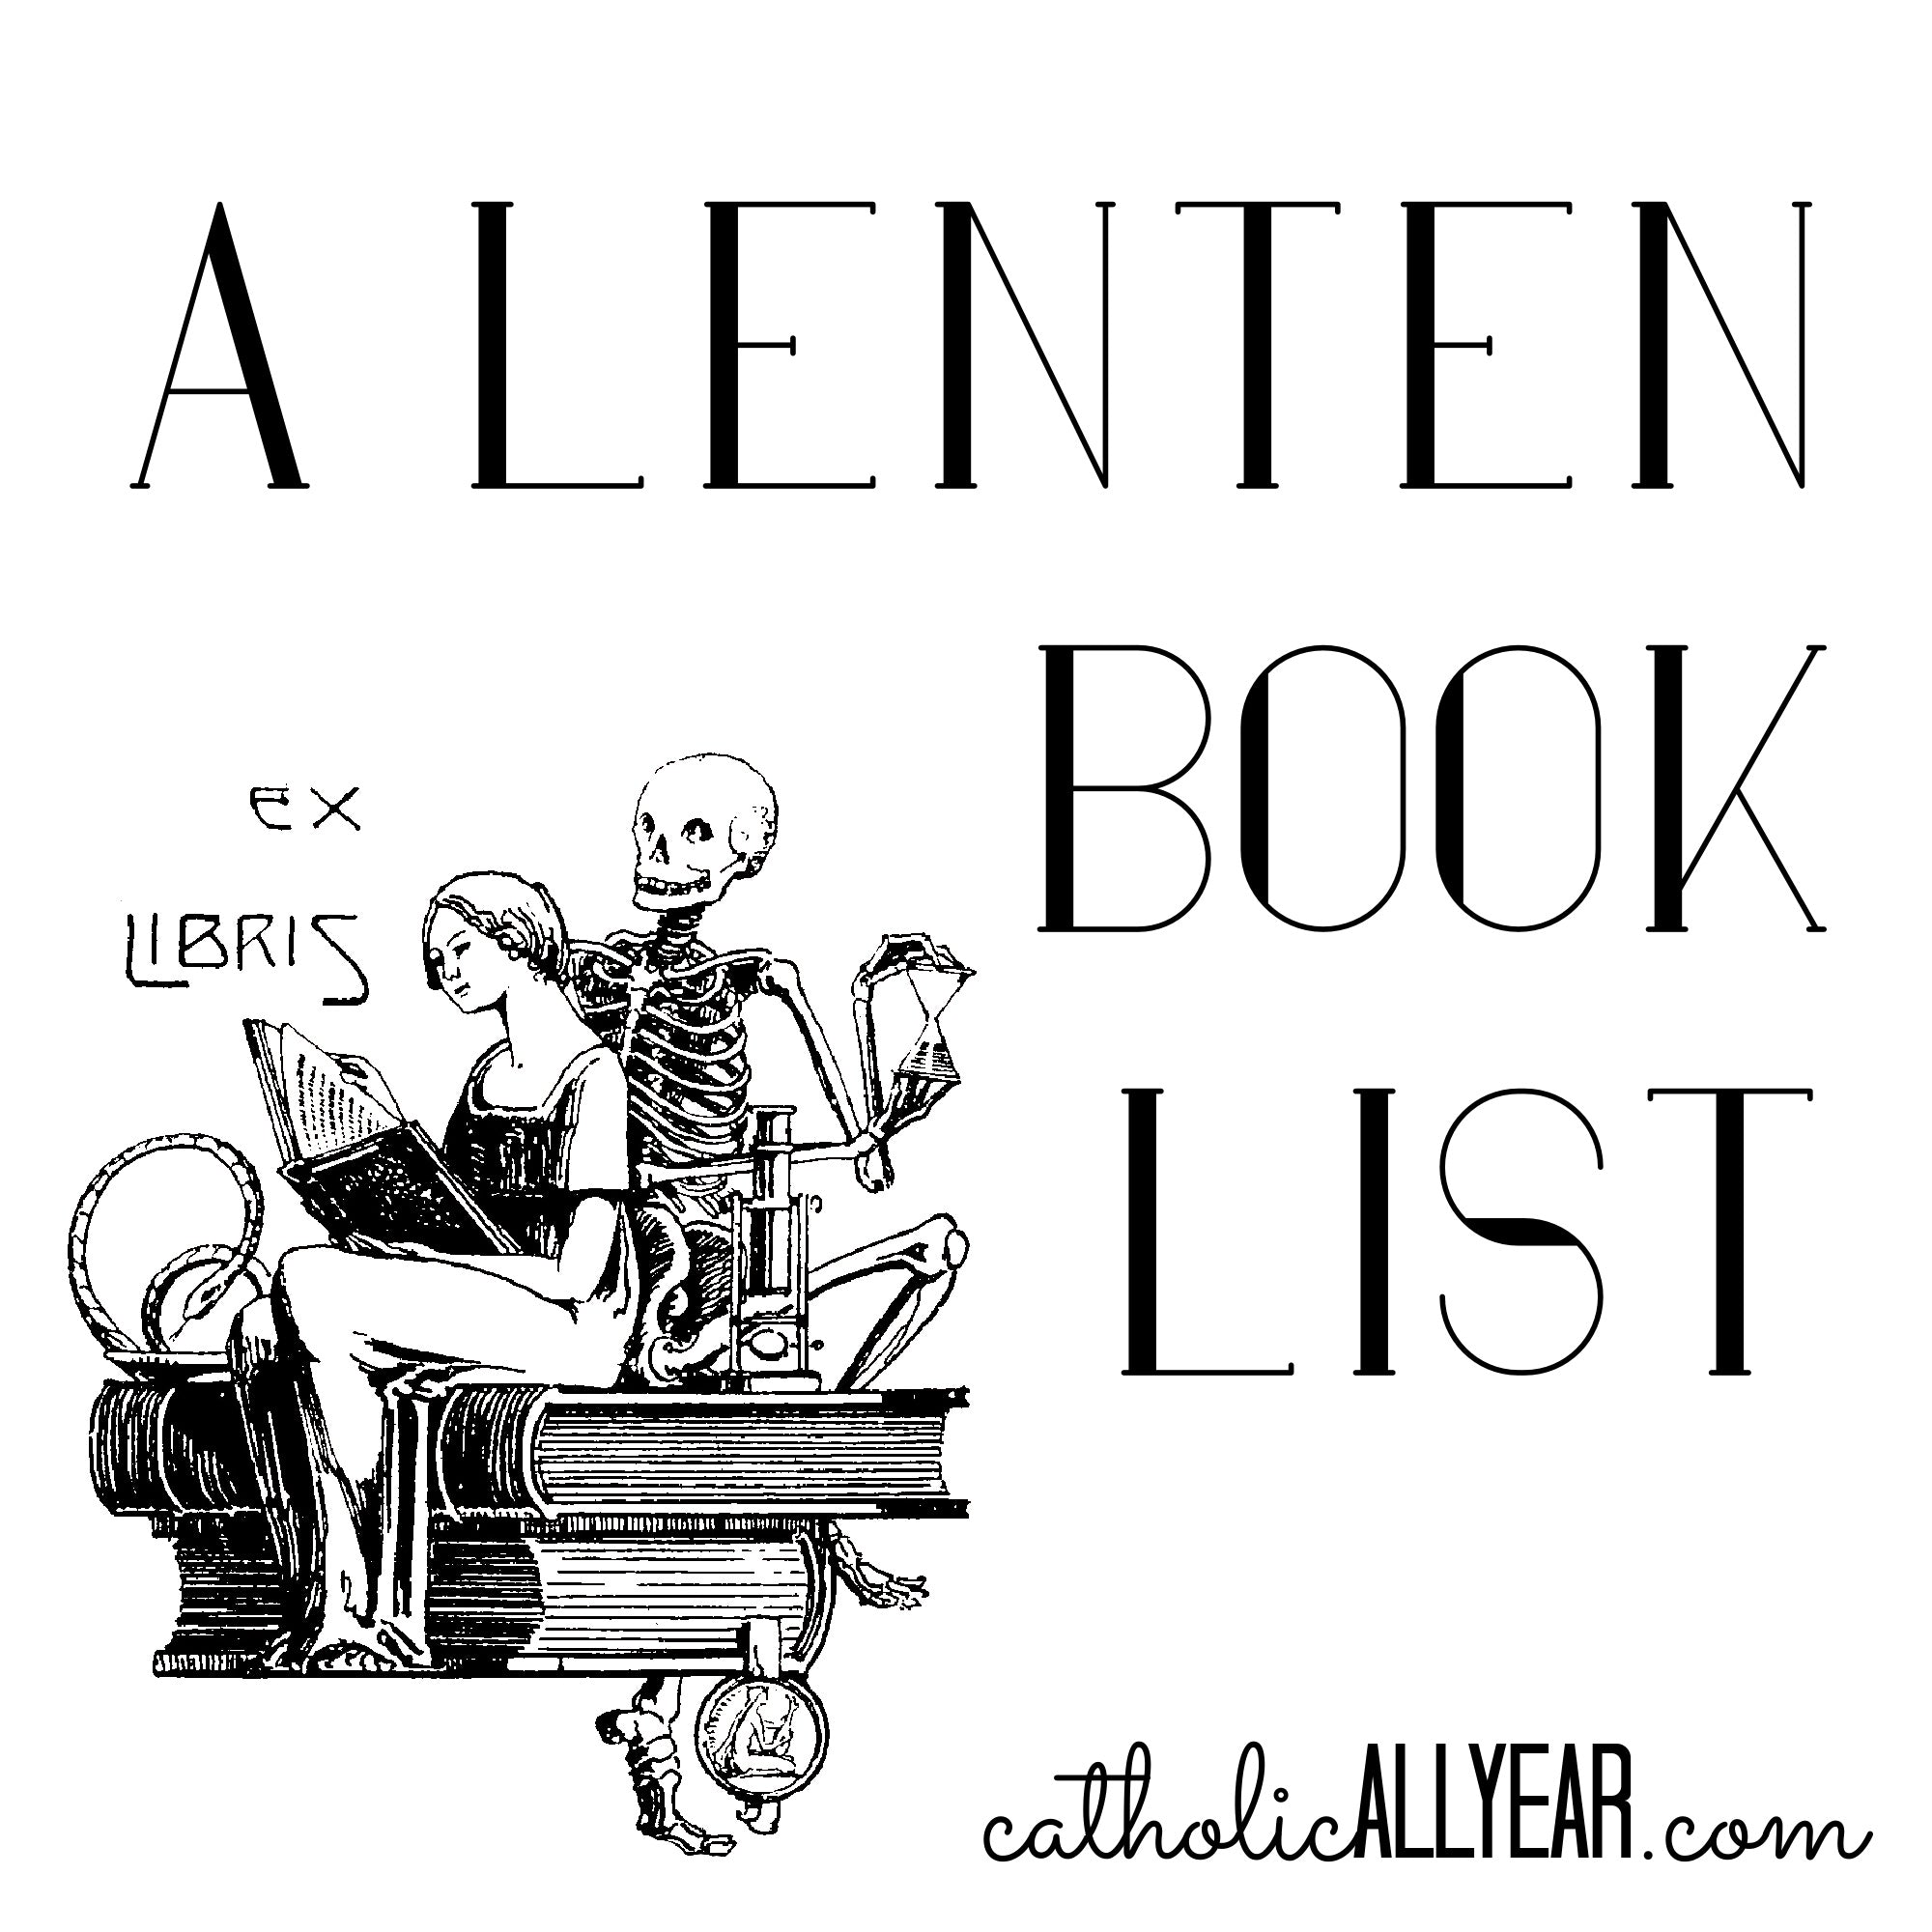 It's Never Too Late to Start: A Lenten Book List